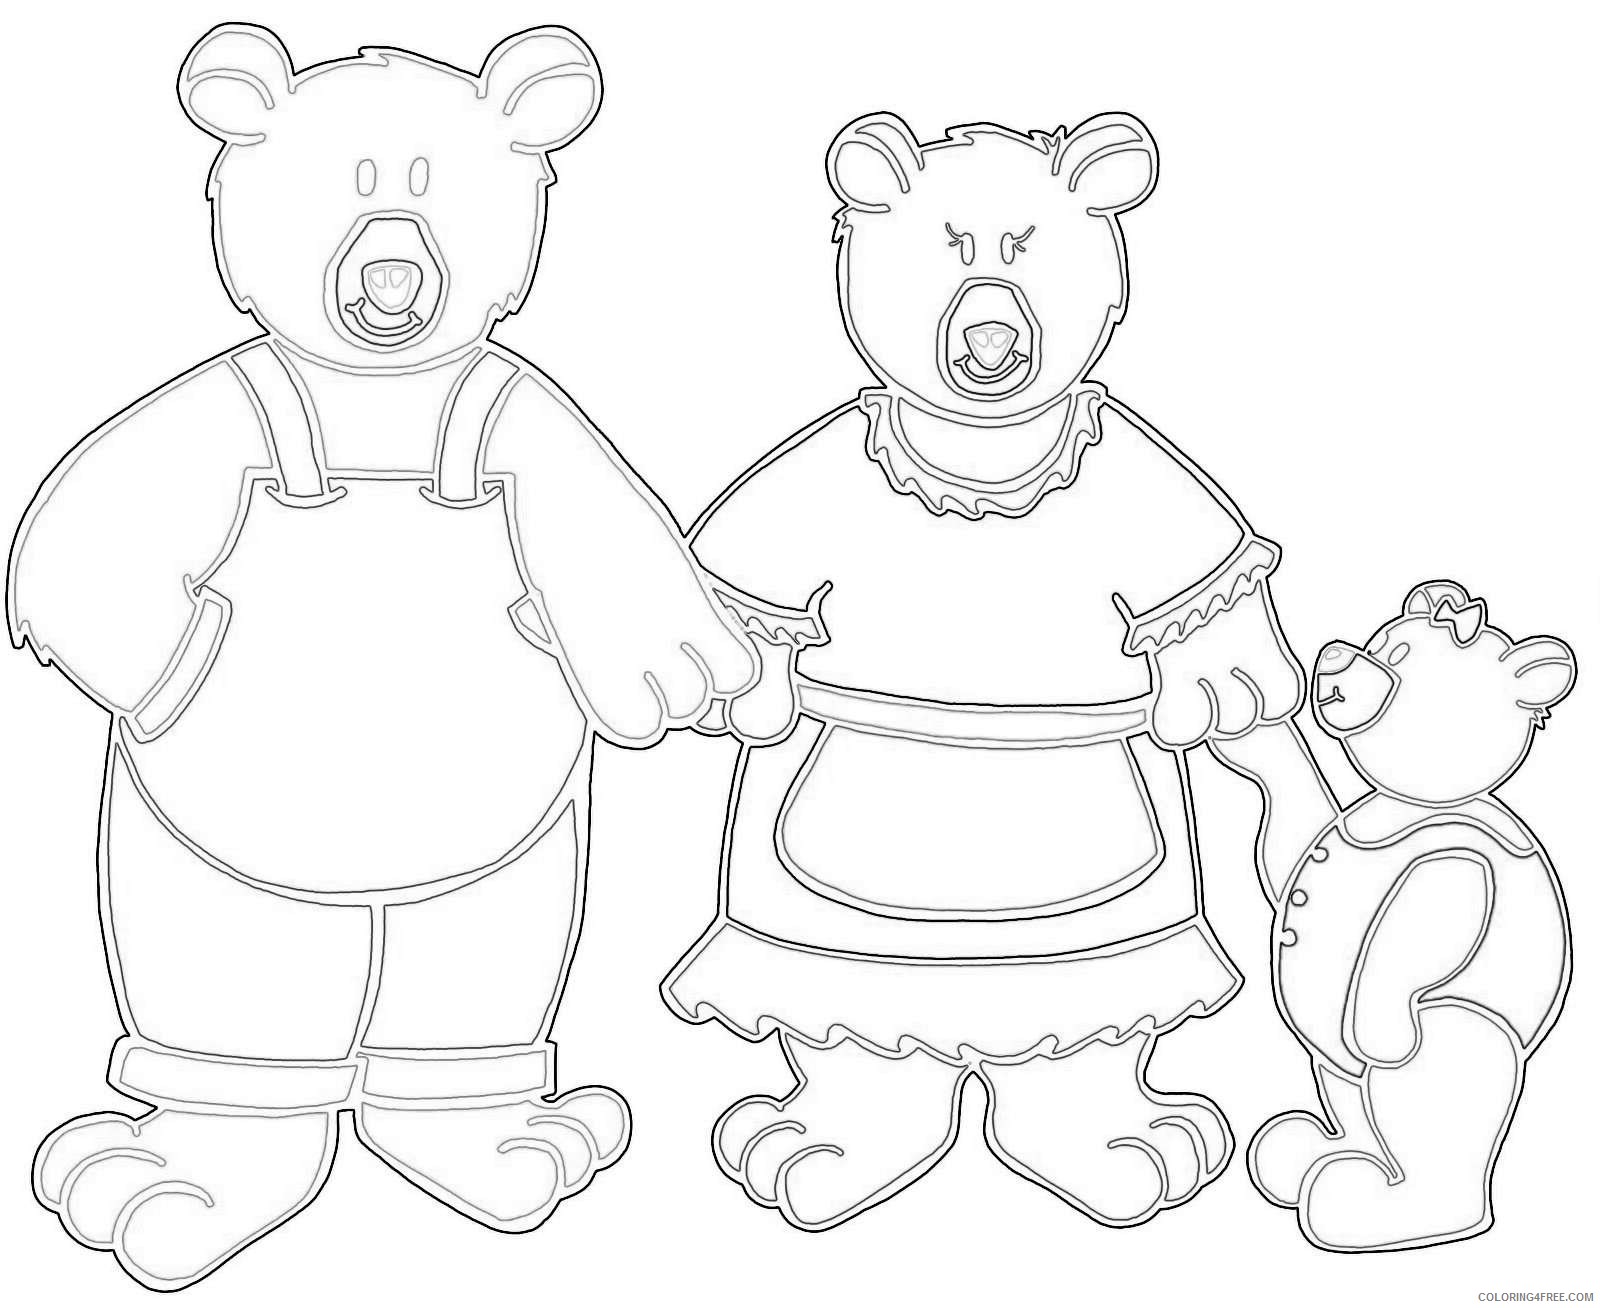 goldilocks and the three bears co 9smbtS coloring